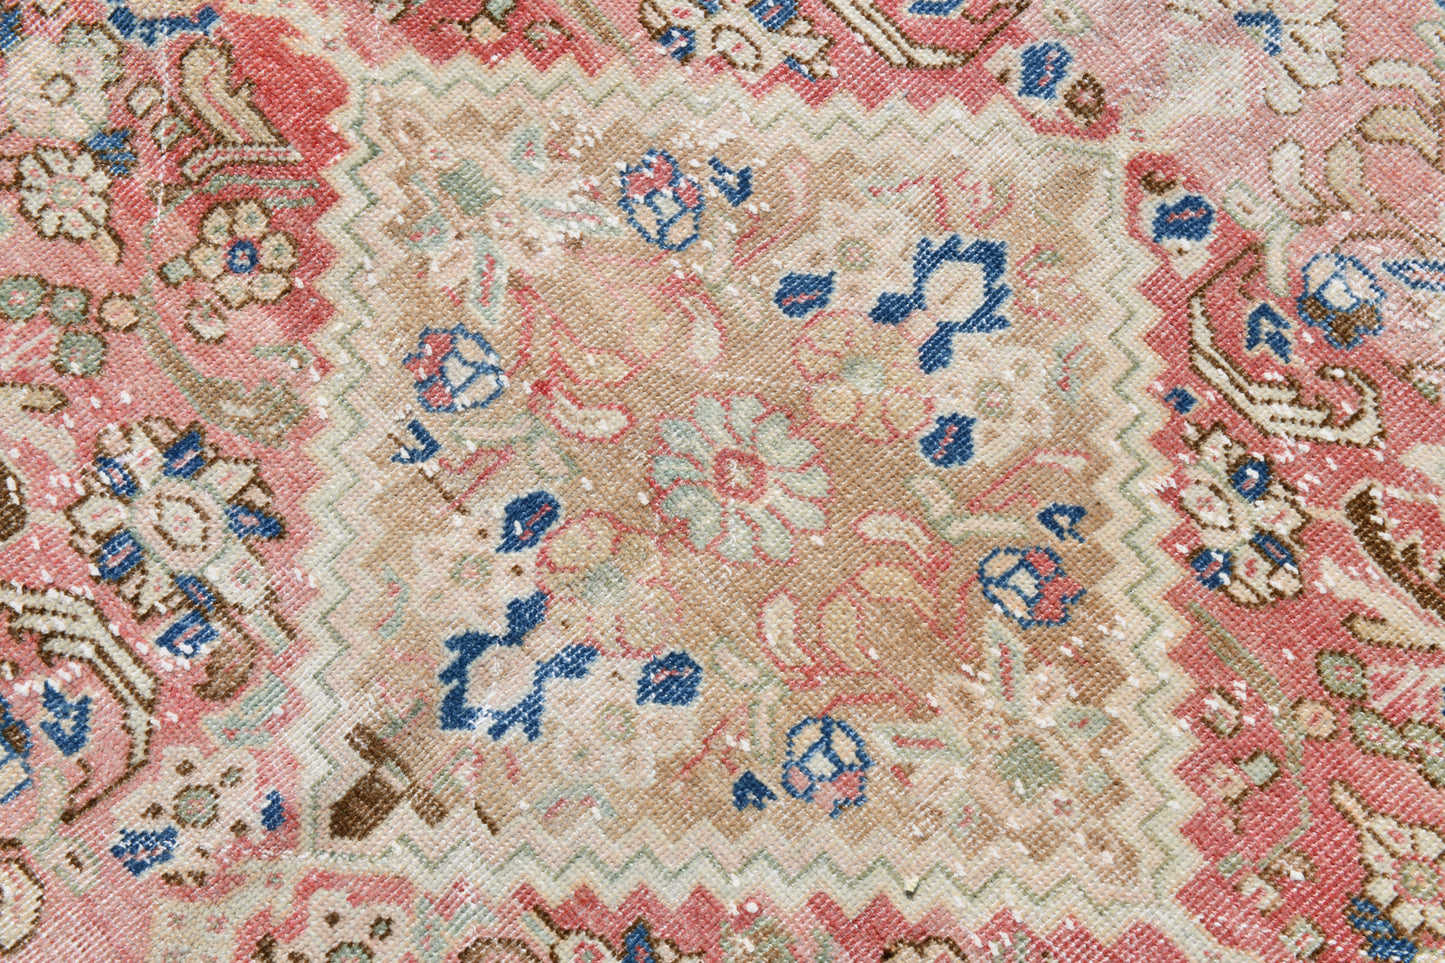 9'6" x 12'1" Vintage Persian Rug - 21994